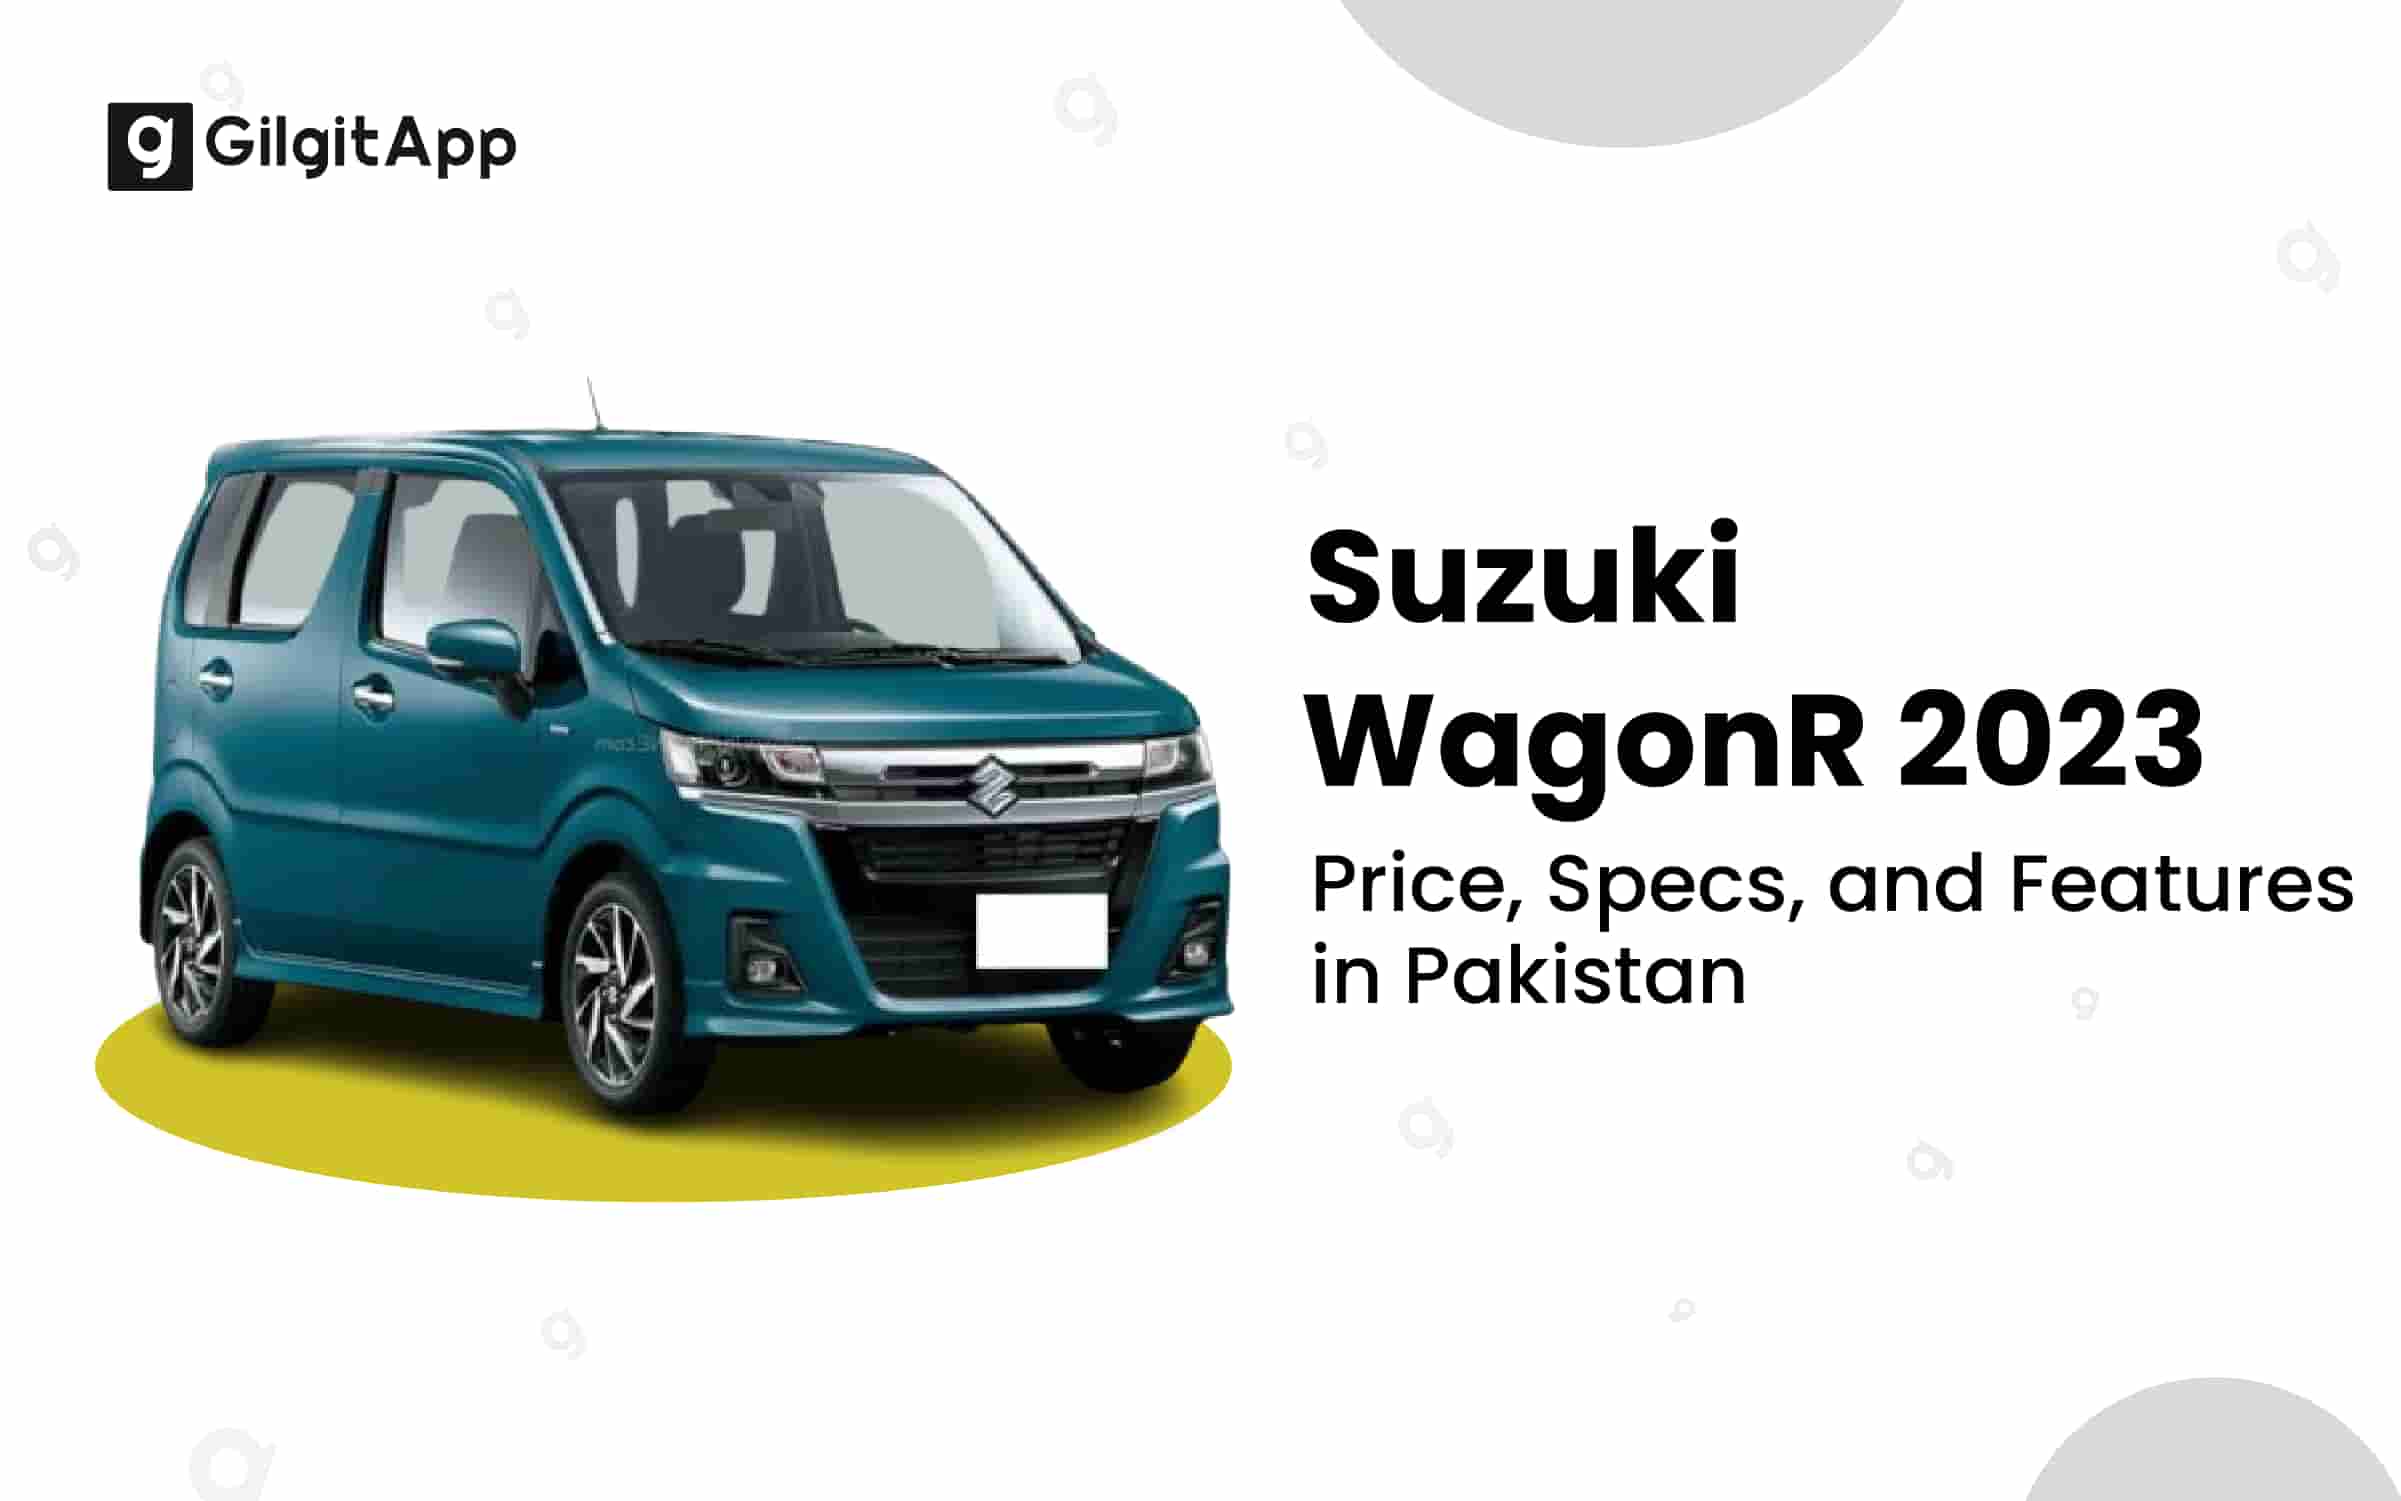 Suzuki WagonR 2023 Price, Specs, and Features in Pakistan